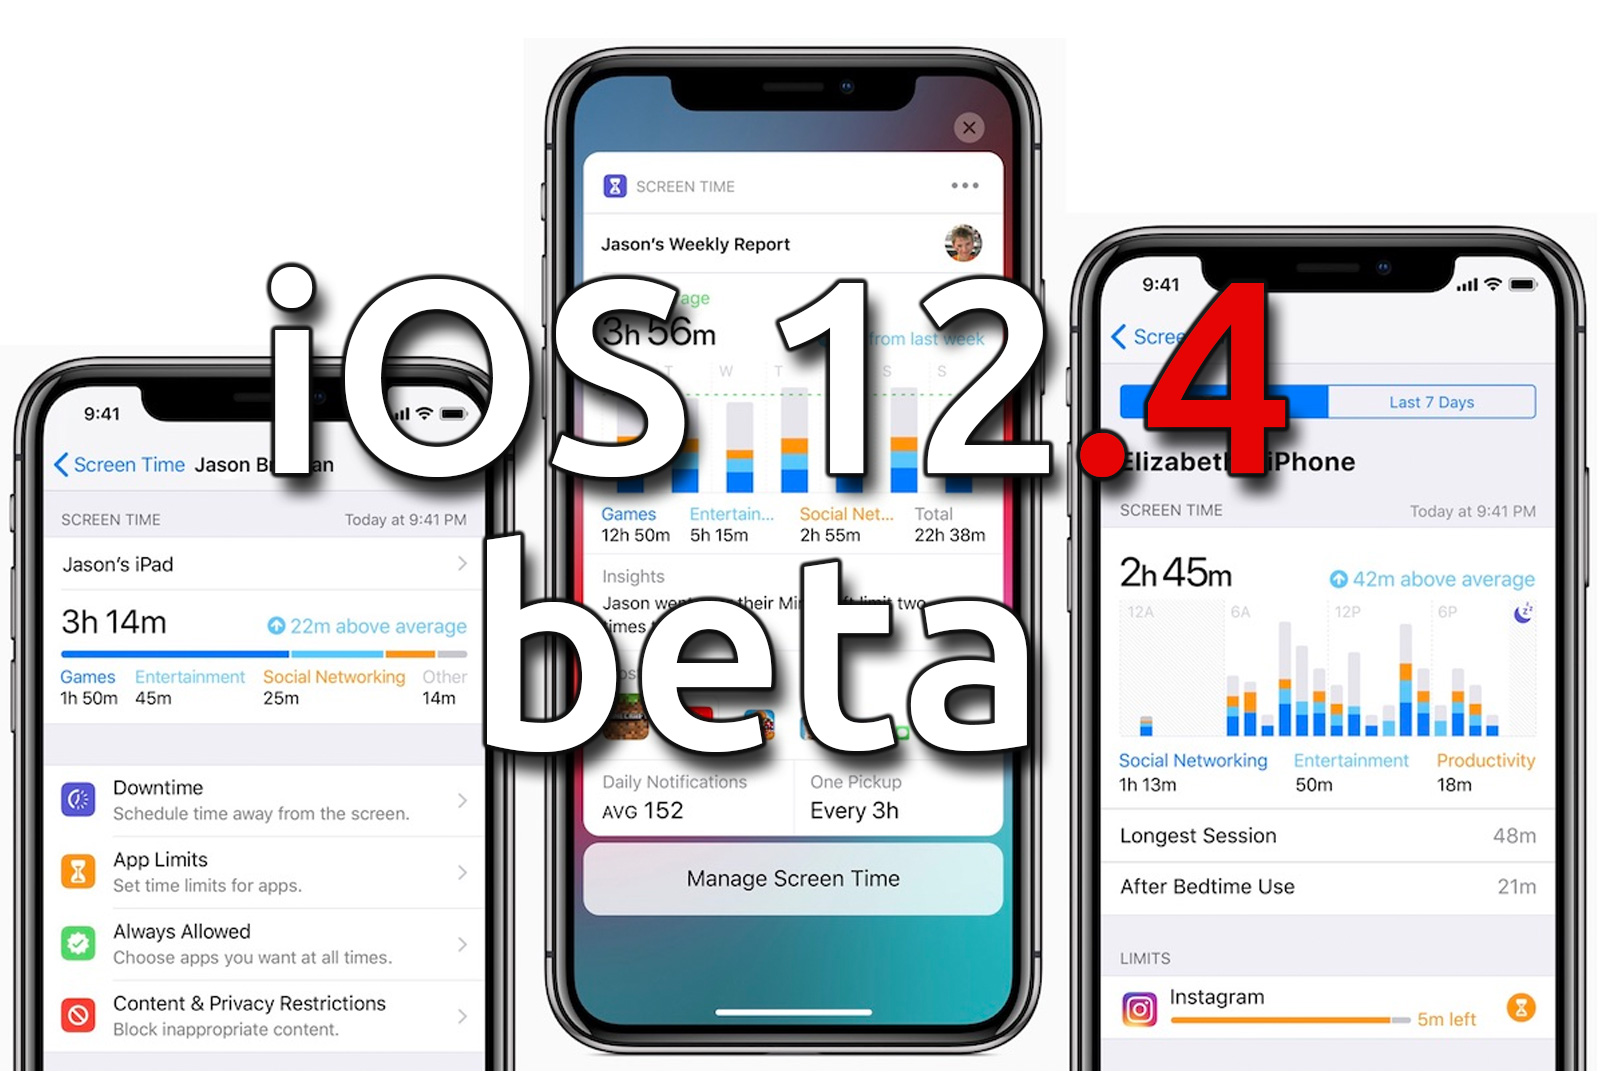 iOS 12.4 beta